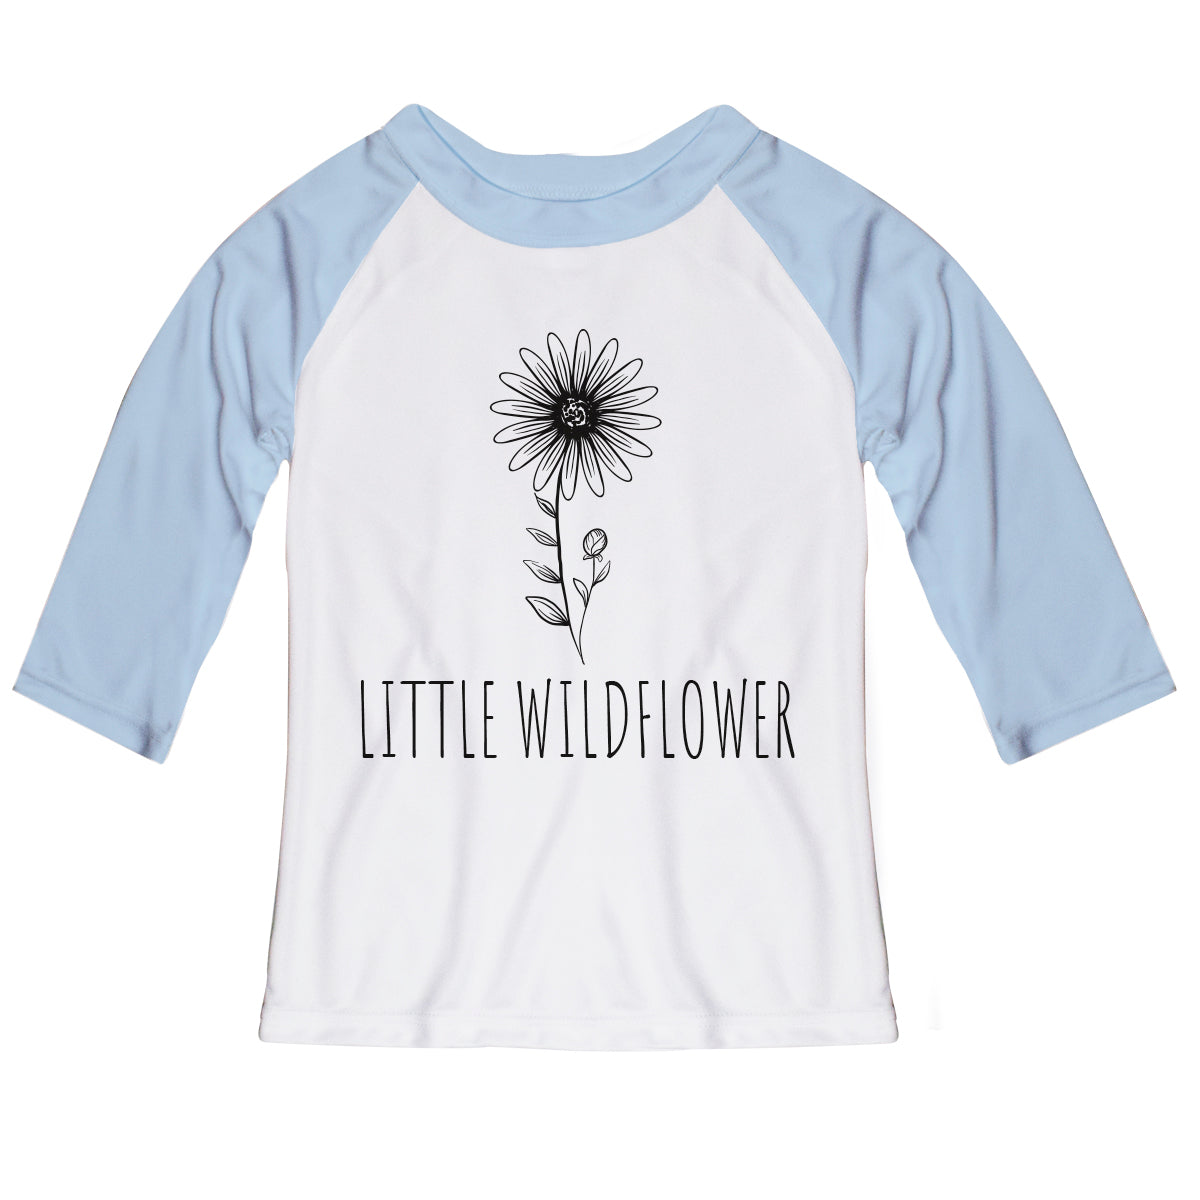 Little Wildflower Light Blue and White Raglan Tee Shirt 3/4 Sleeve